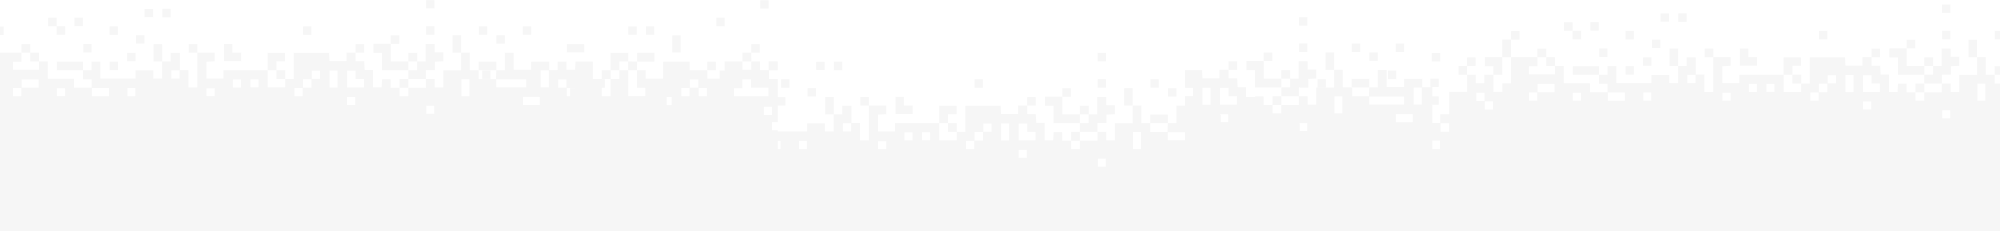 Pixel bottom